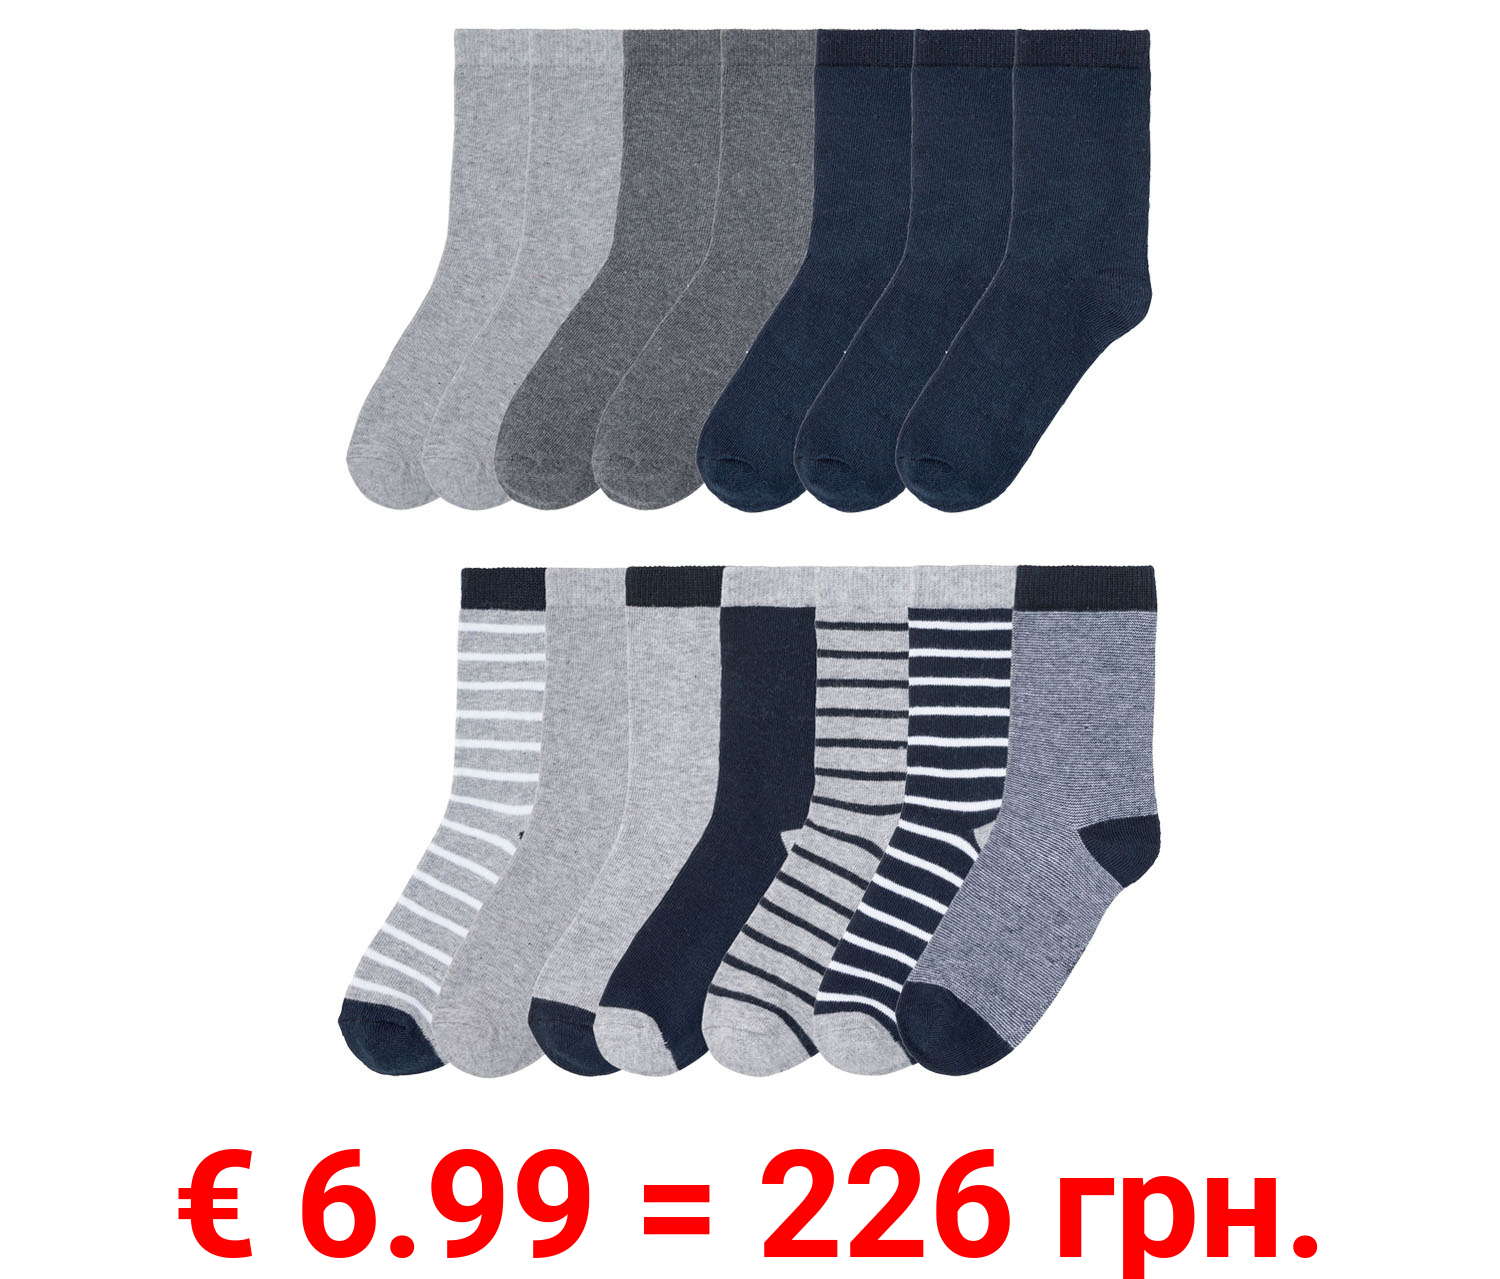 PEPPERTS® Jungen Socken, 7 Paar, mit Baumwolle